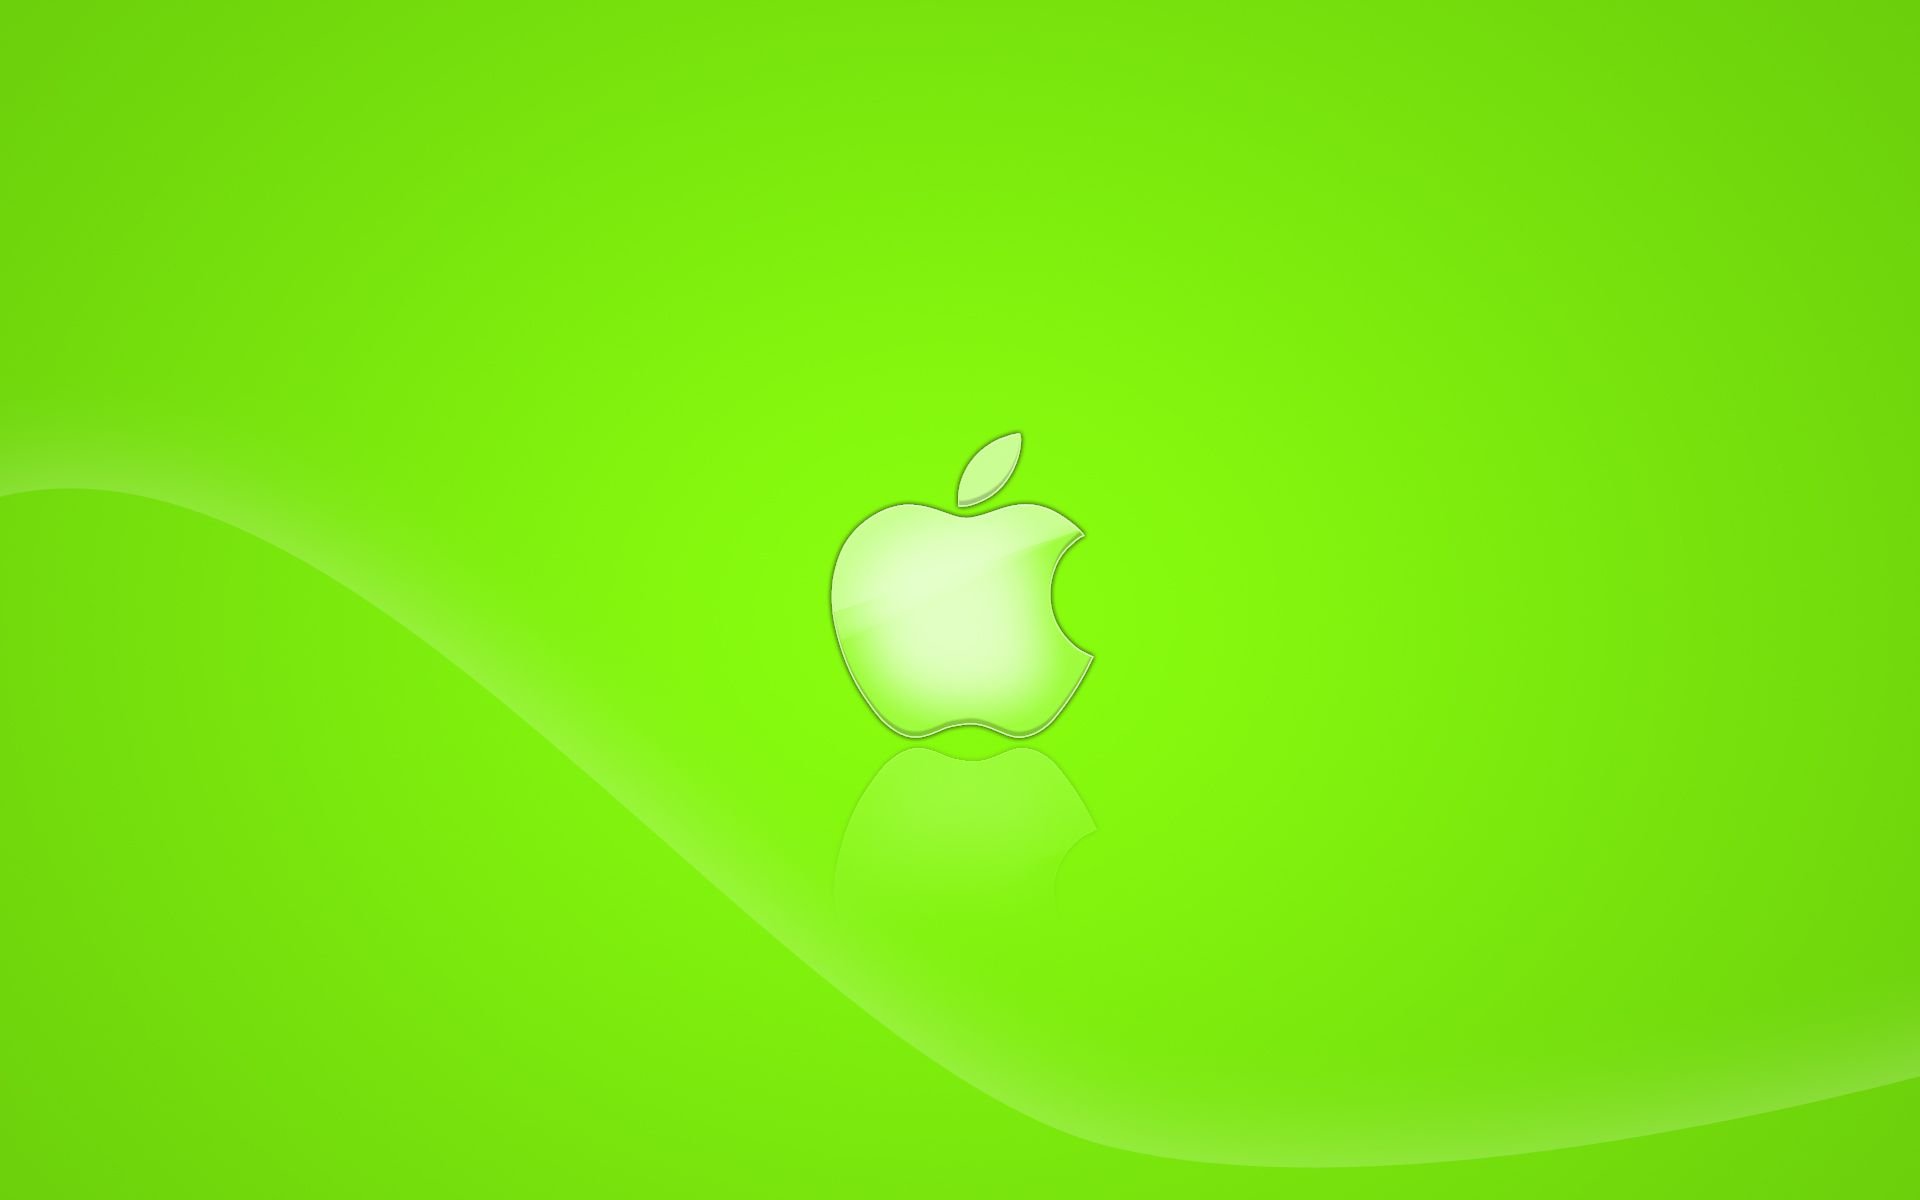 Обои айфон 1. Яблочко айфона. Обои на ПК яблочко. Обои айфон на компьютер без яблока. Логотип эпл фонирюзовый.